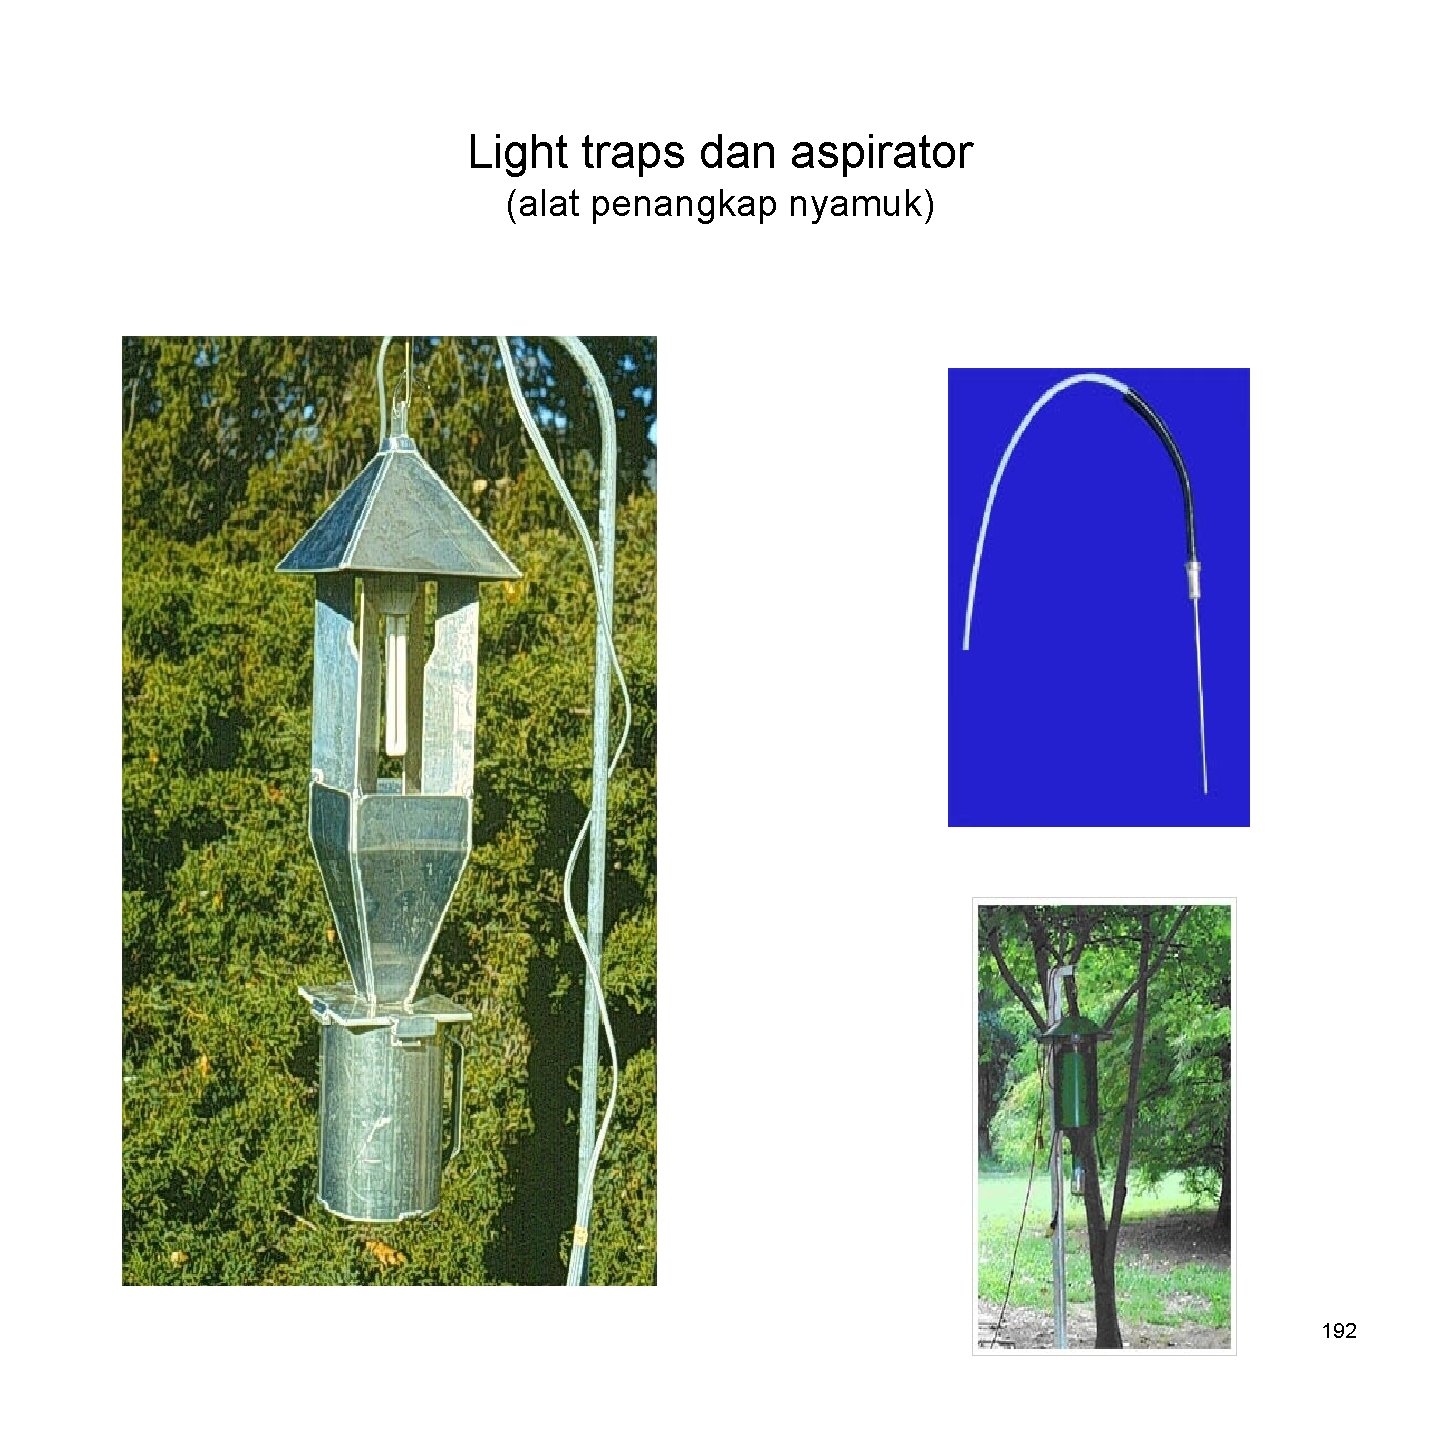 Light traps dan aspirator (alat penangkap nyamuk) 192 